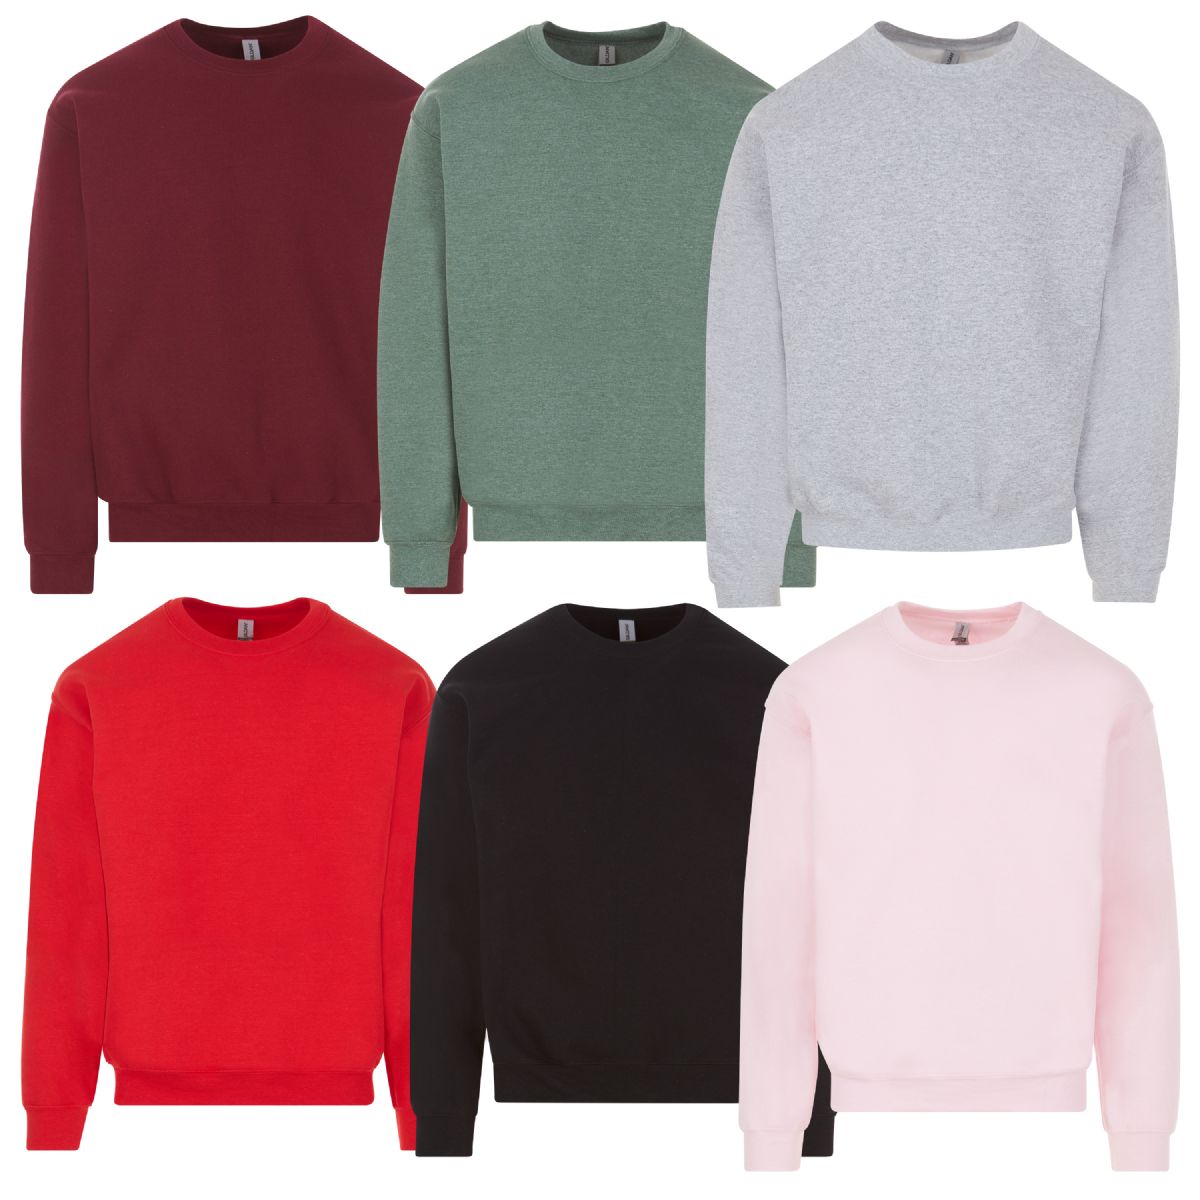 12 Pieces of Gildan Unisex Assorted Colors Fleece Sweat Shirts Size Large